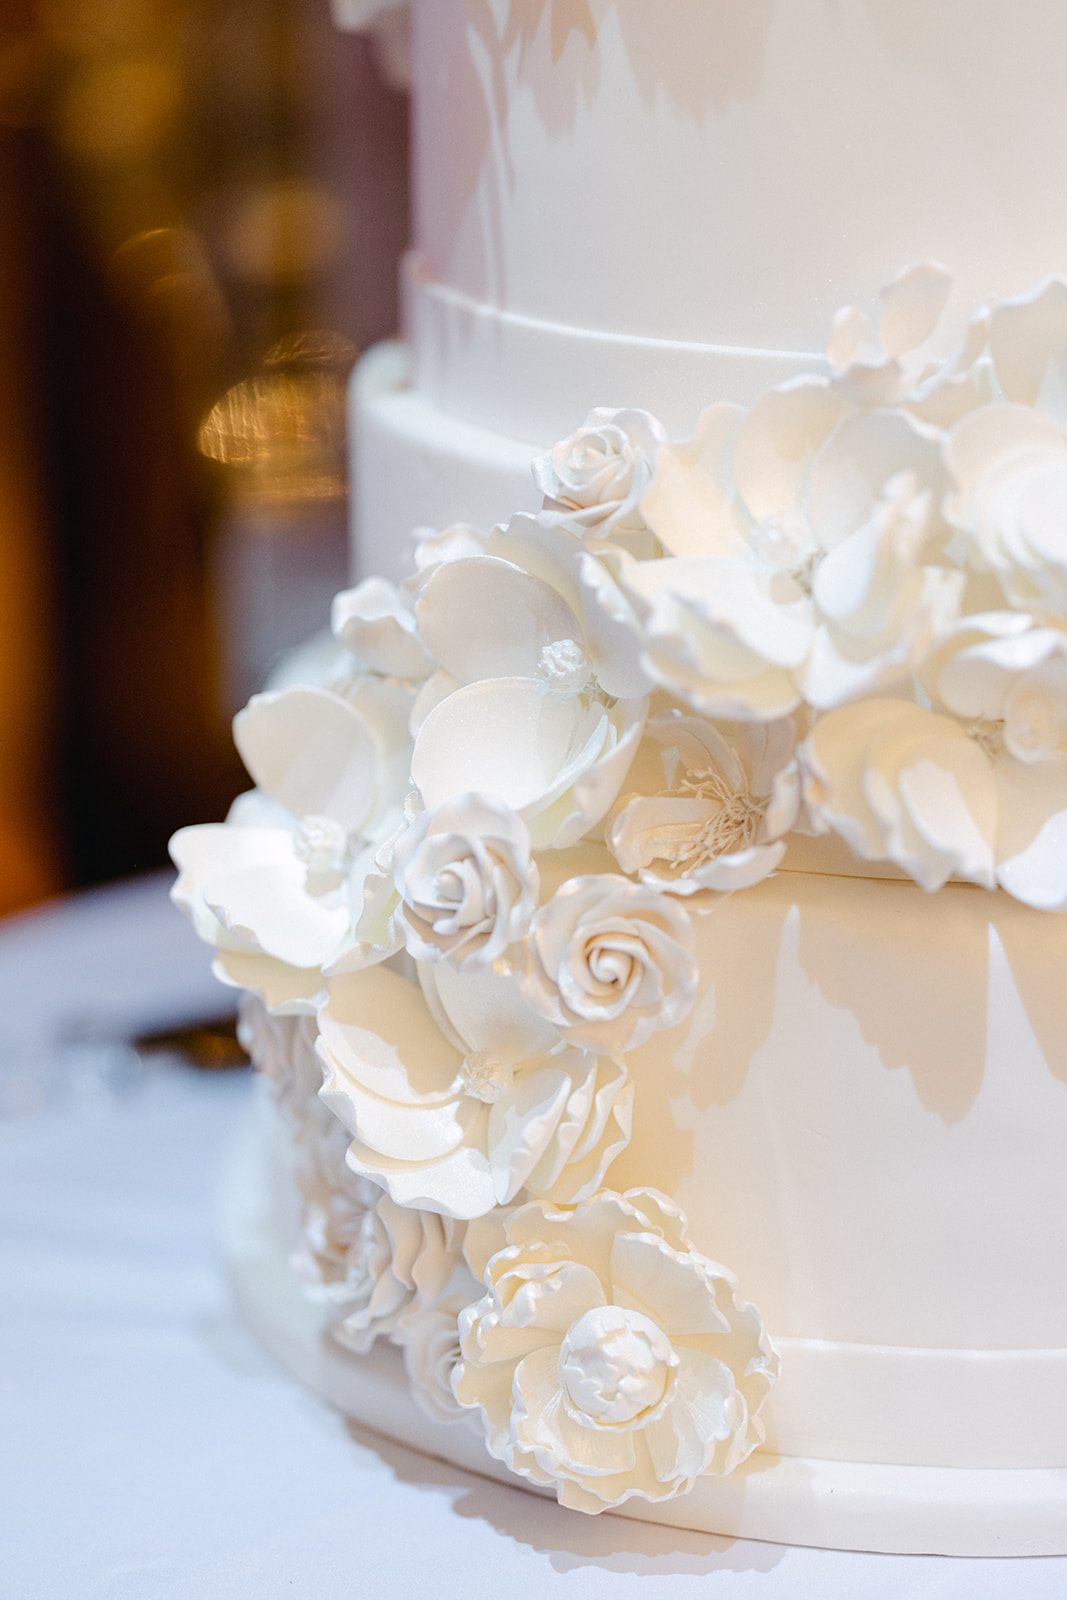 Floral details on white wedding cake 